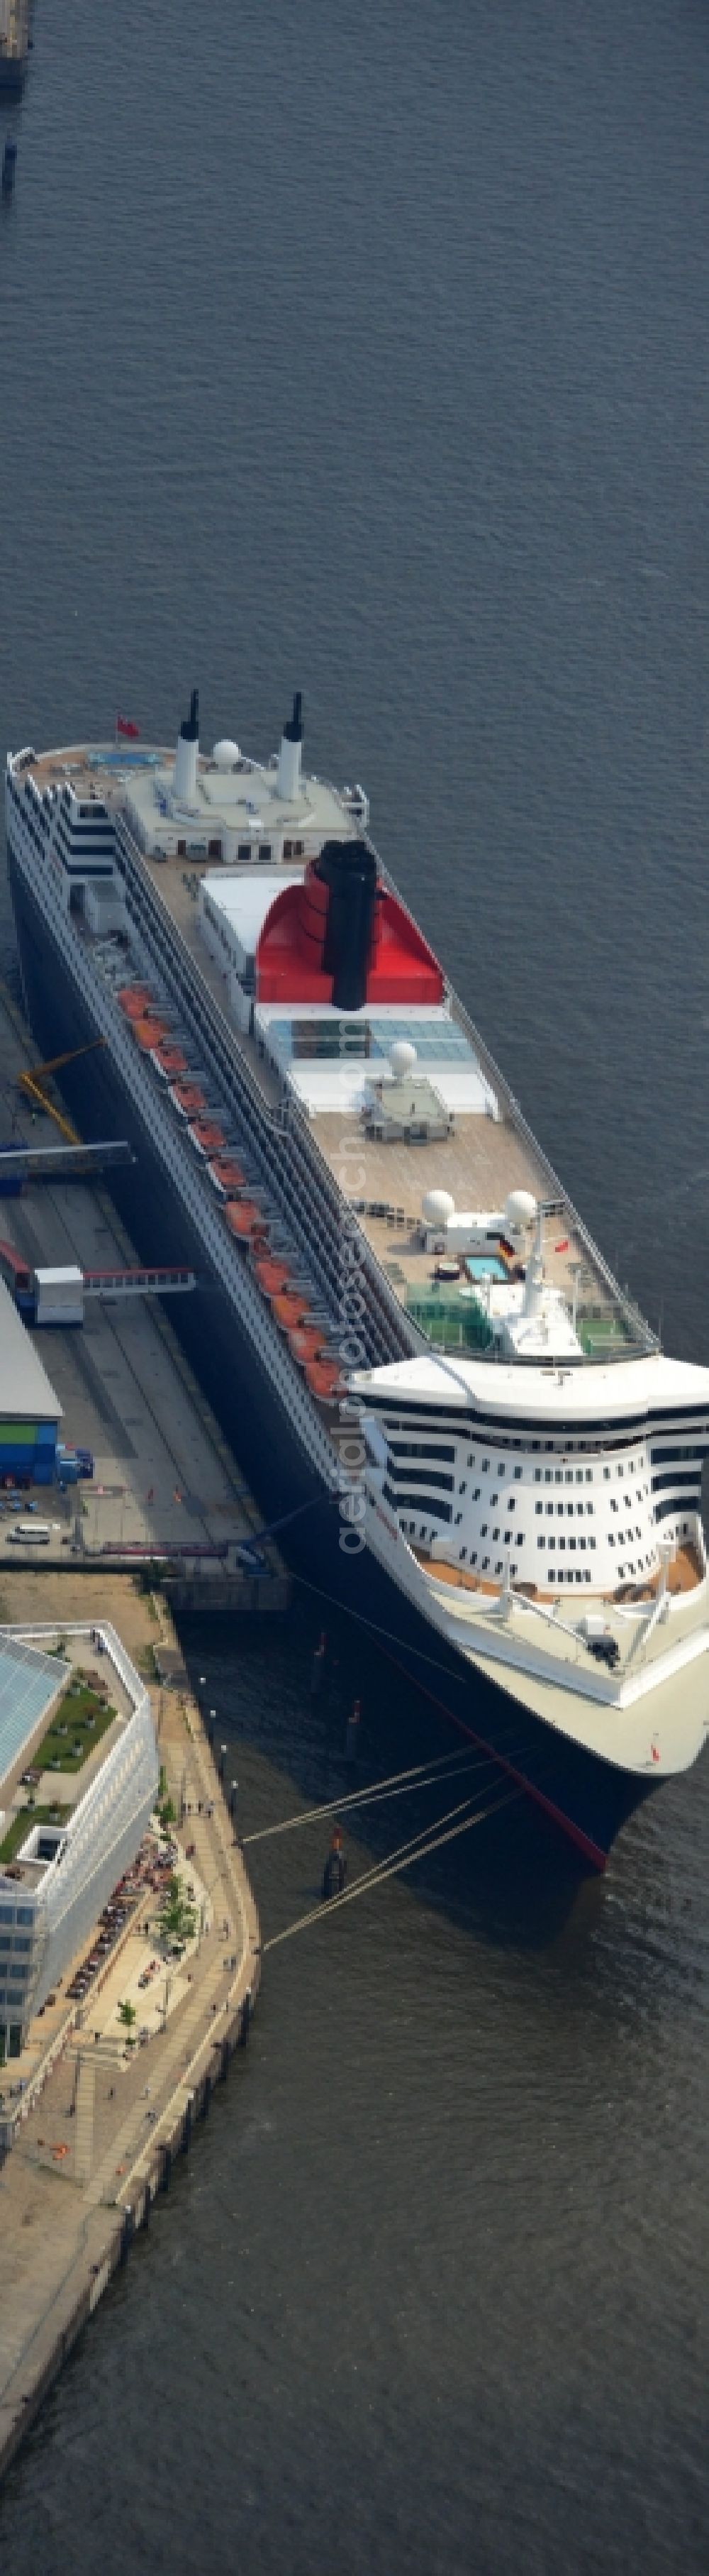 Hamburg from above - Passenger ship and luxury liner Queen Mary 2 on Chicagokai - Strandkai in Hamburg